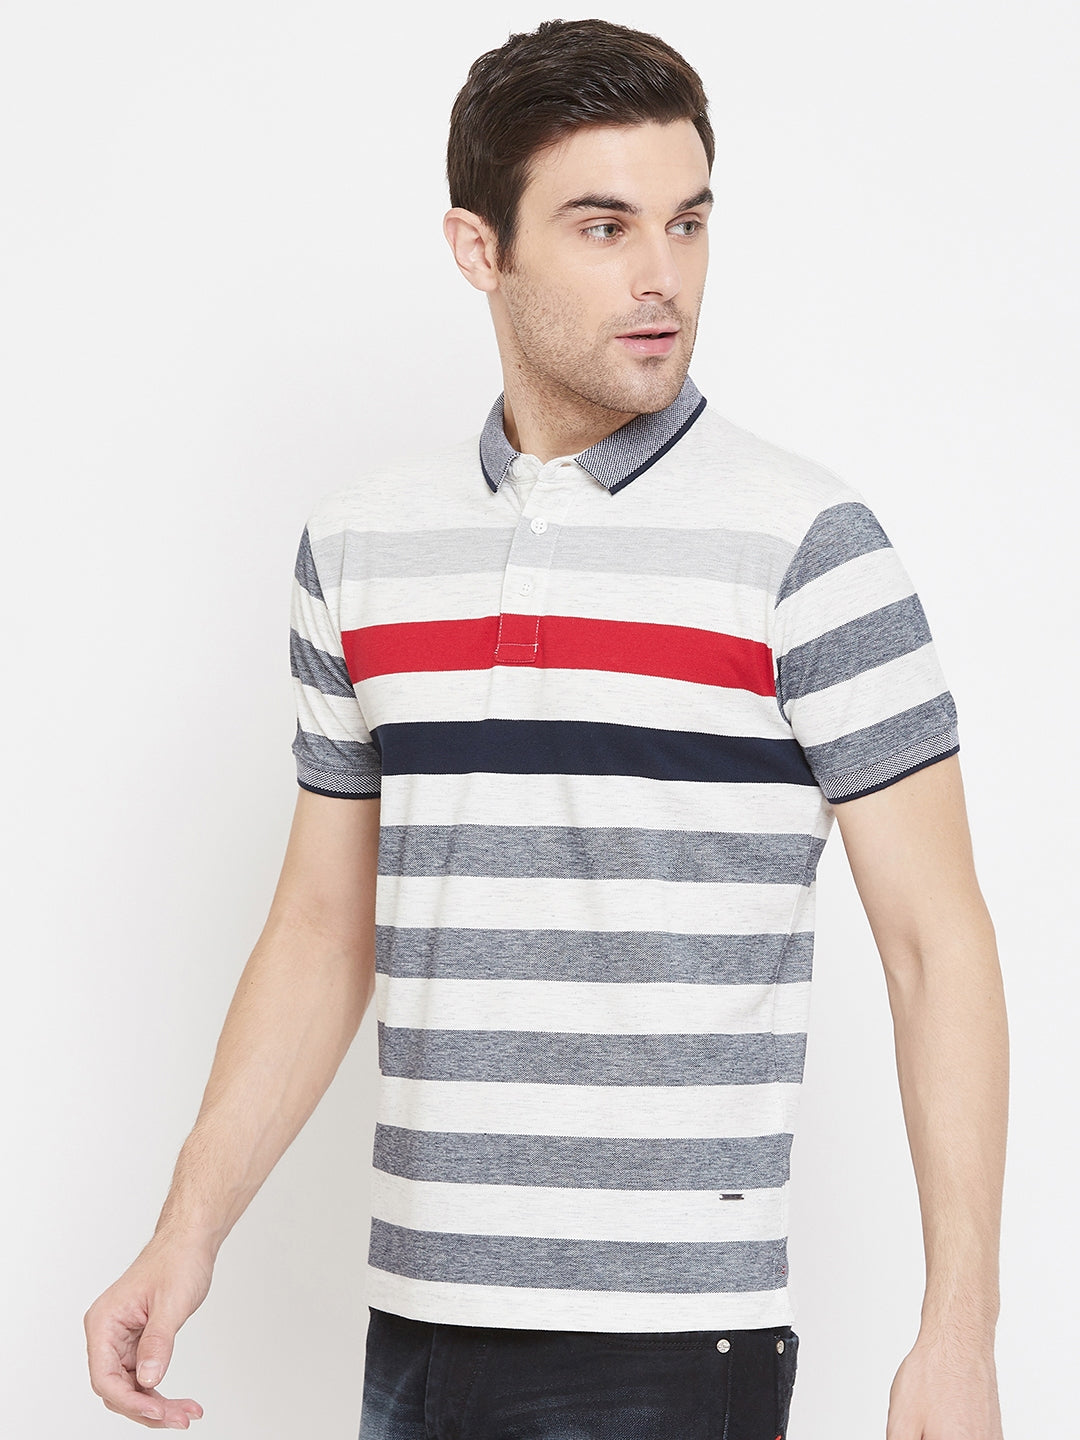 Striped T-shirt - Men T-Shirts